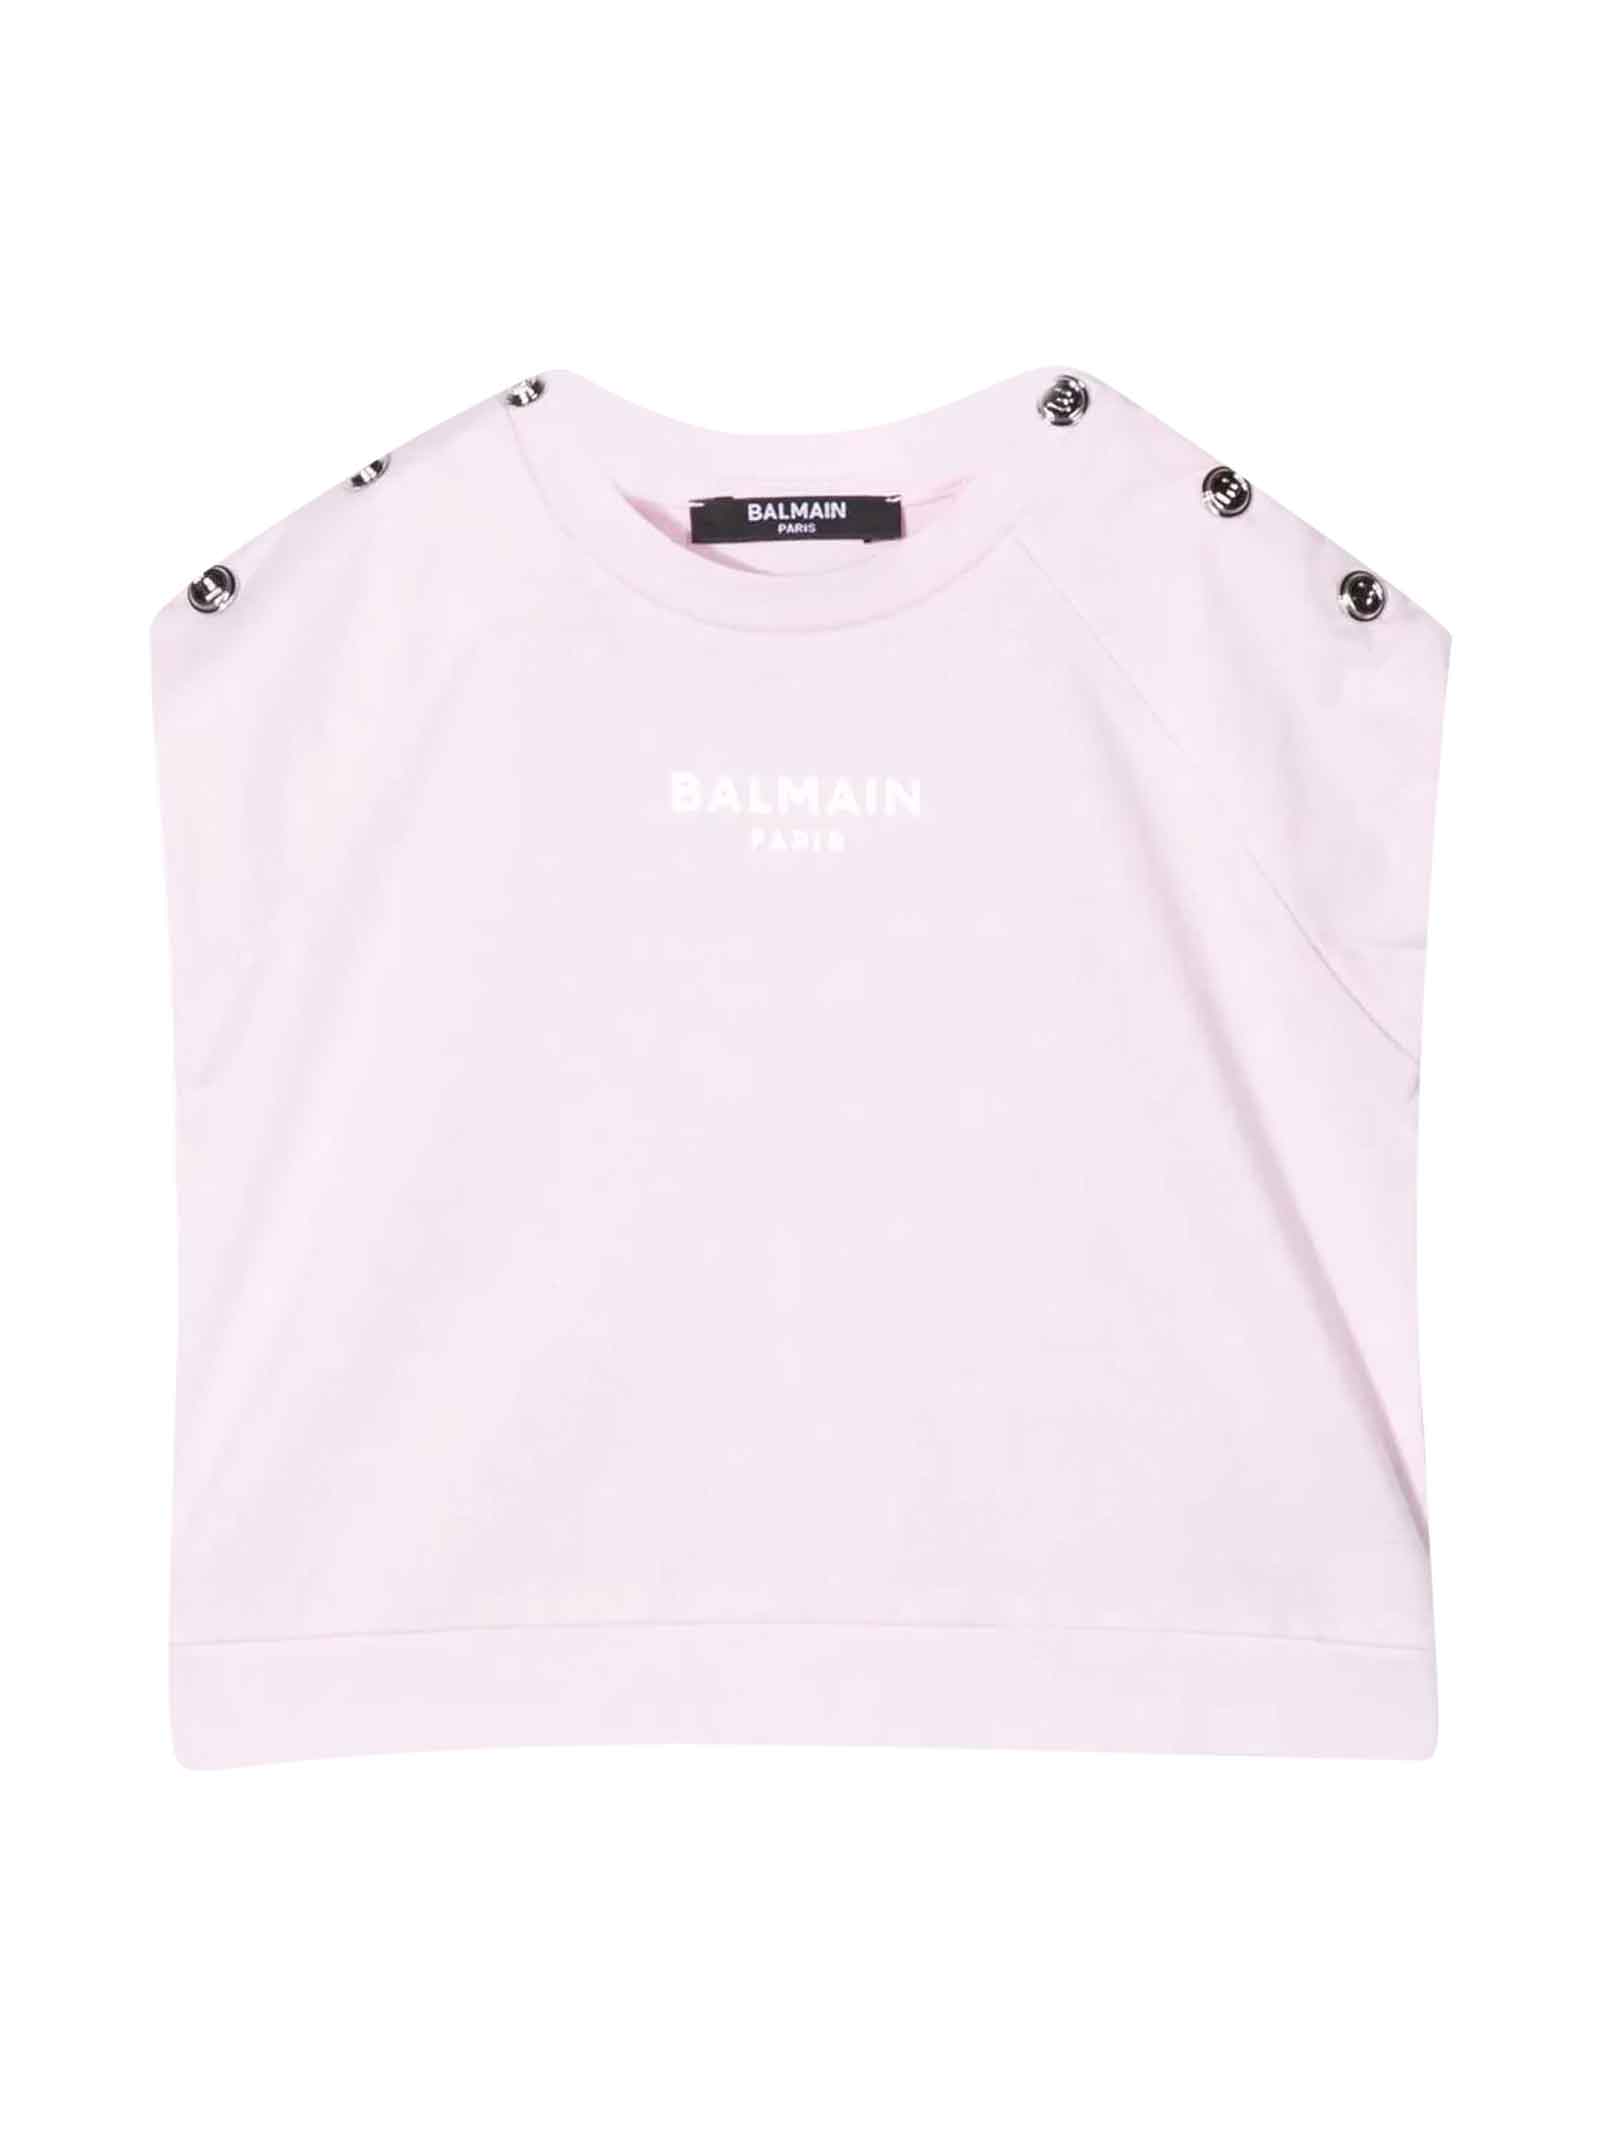 Balmain Pink T-shirt With Applications And Logo